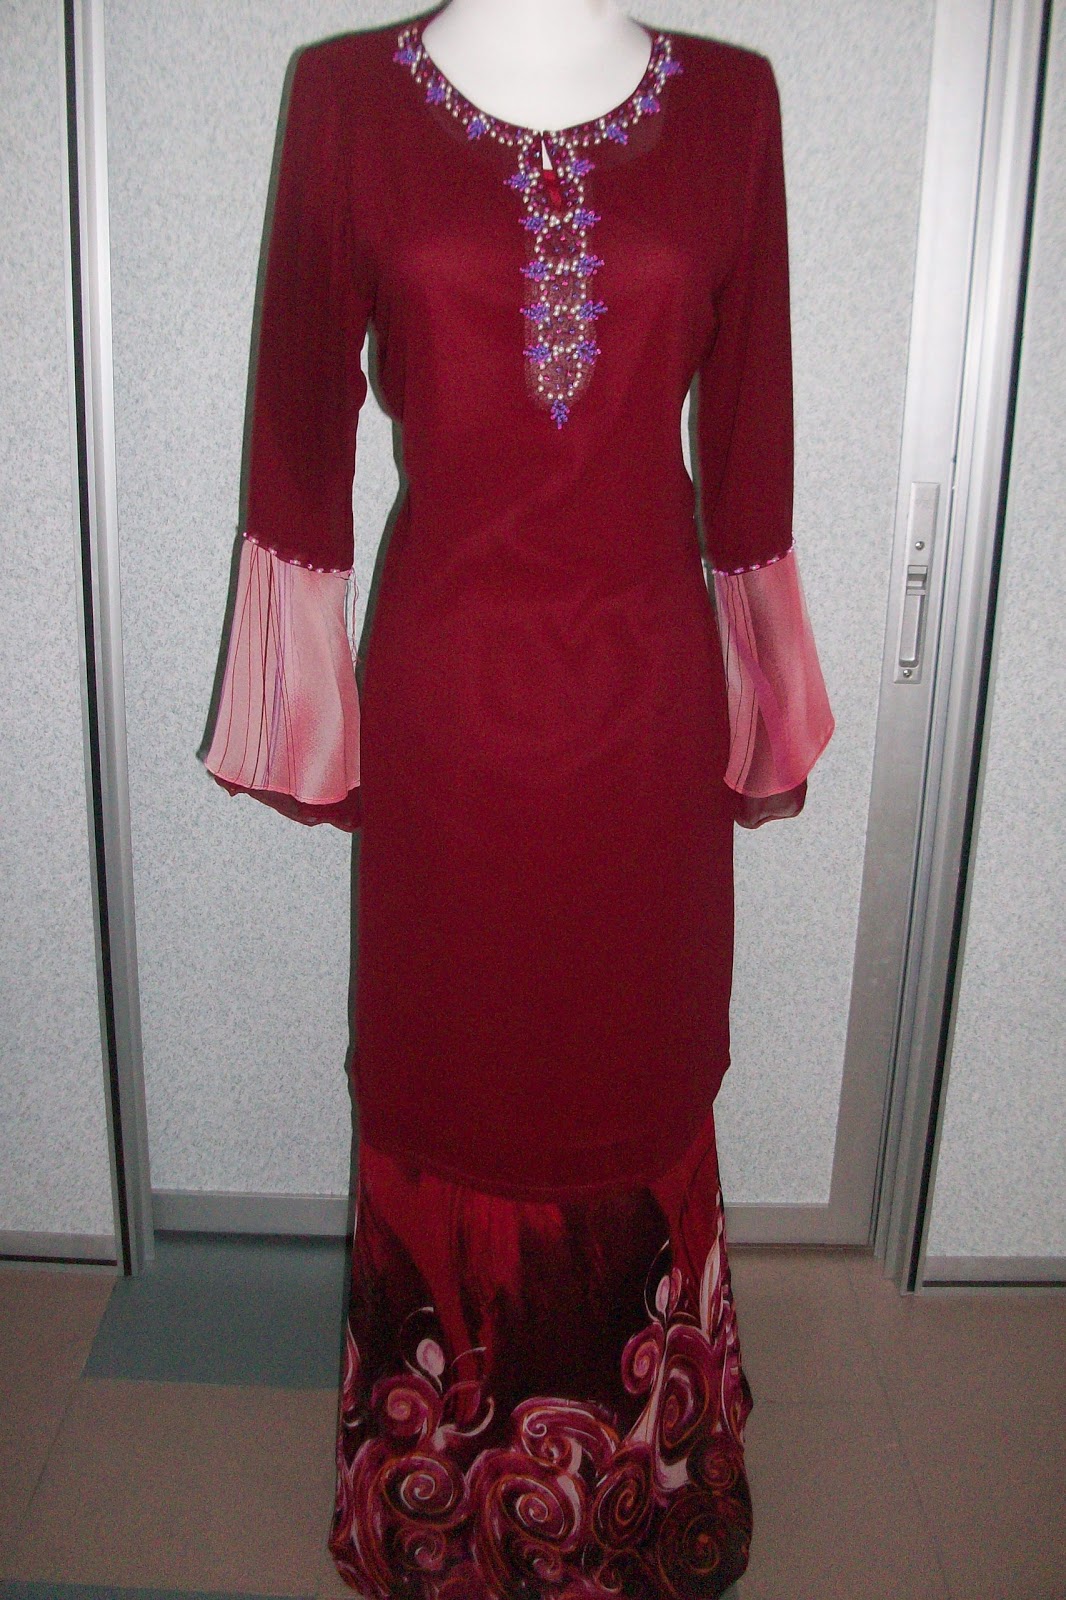 Baju Kurung.biru Hijau Merah : Baju Kurung Riau Songket Lana - Hijau